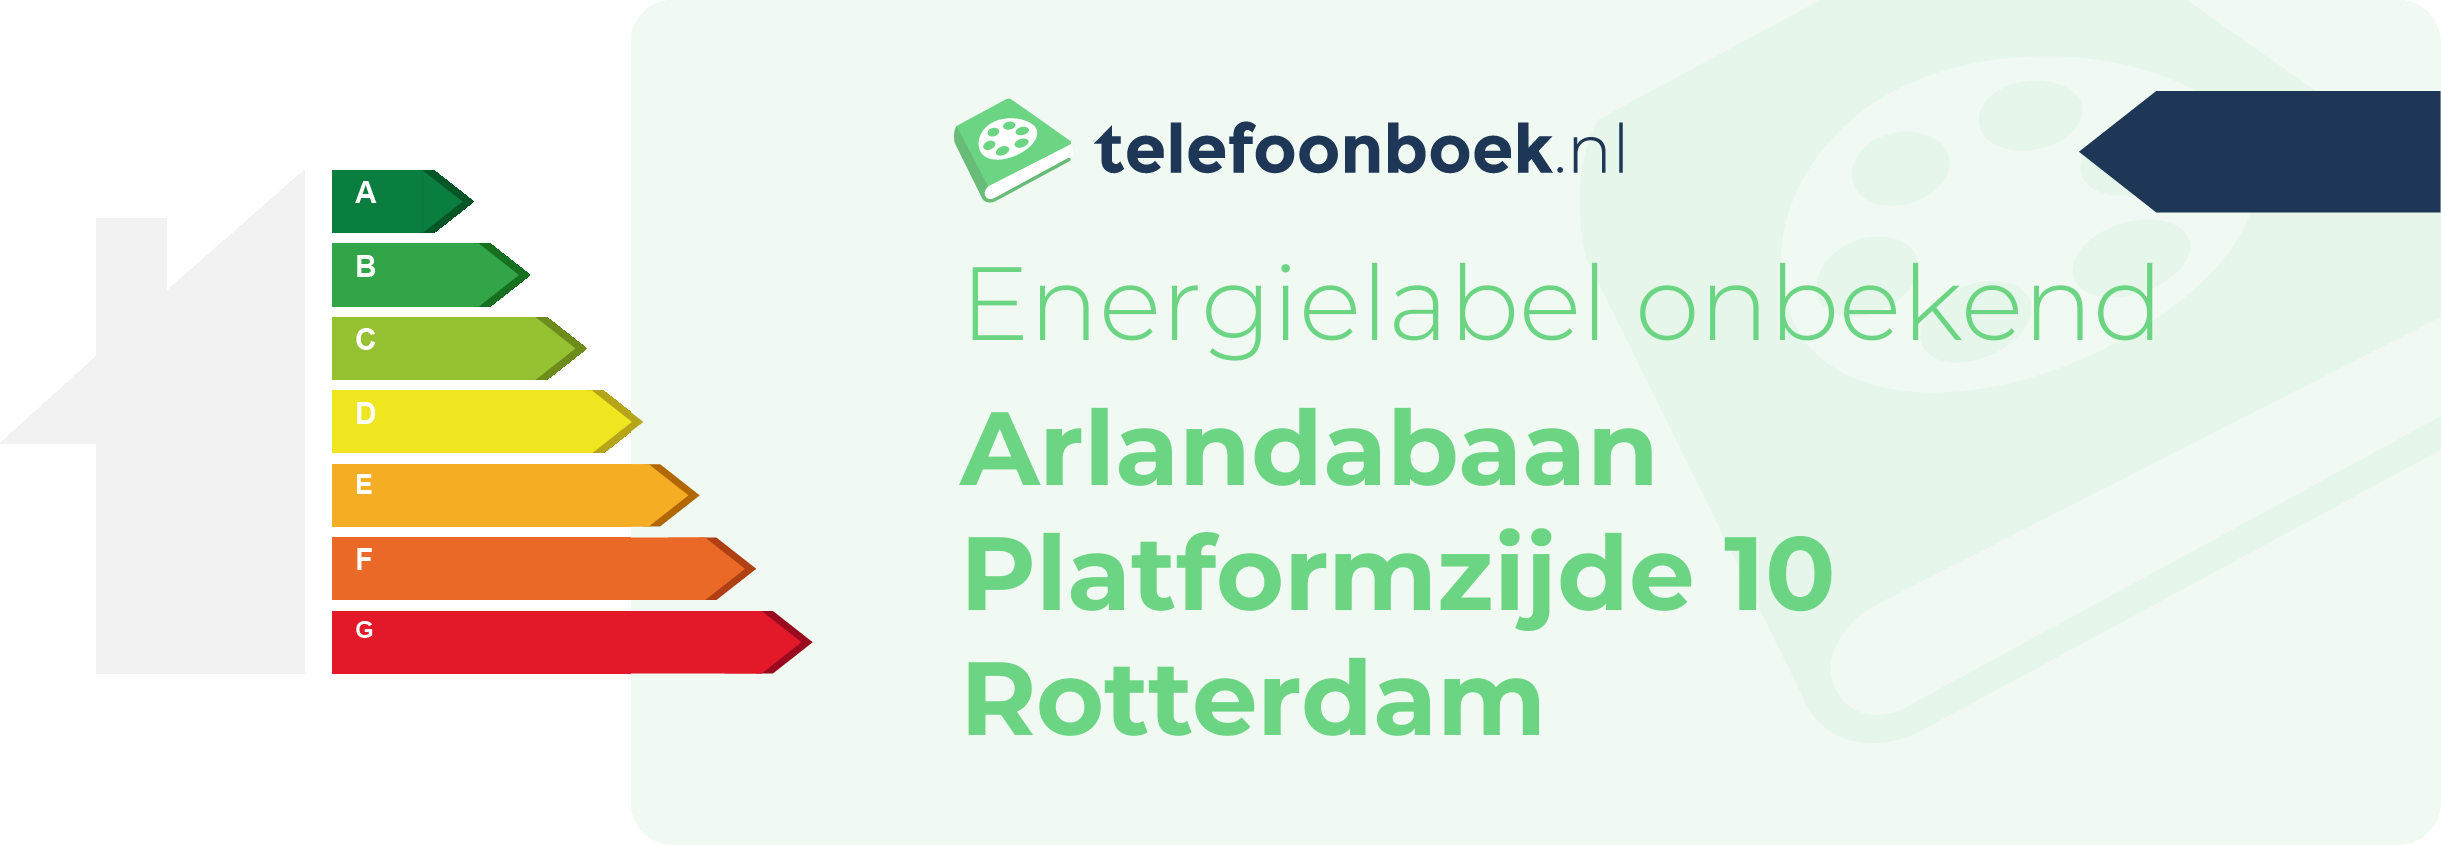 Energielabel Arlandabaan Platformzijde 10 Rotterdam